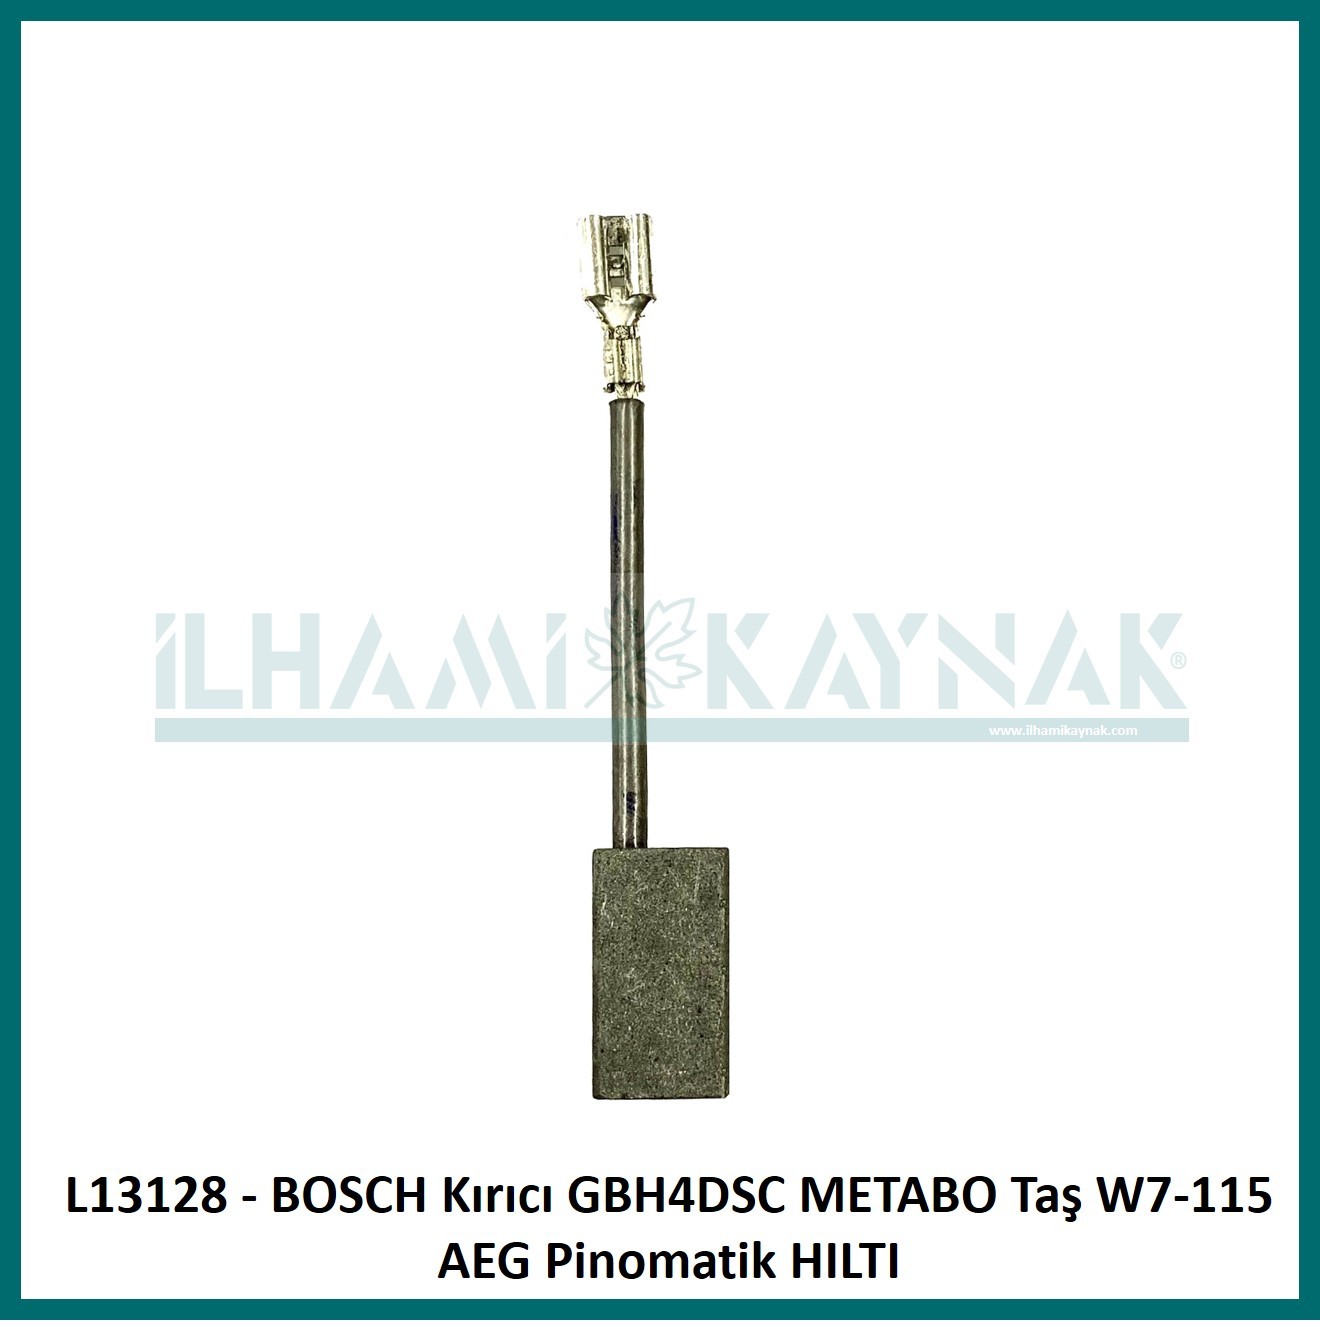 L13128 - BOSCH Kırıcı GBH4DSC METABO Taş W7-115 AEG Pinomatik HILTI - 5*10*17 mm - Minimum Satın Alım: 10 Adet.